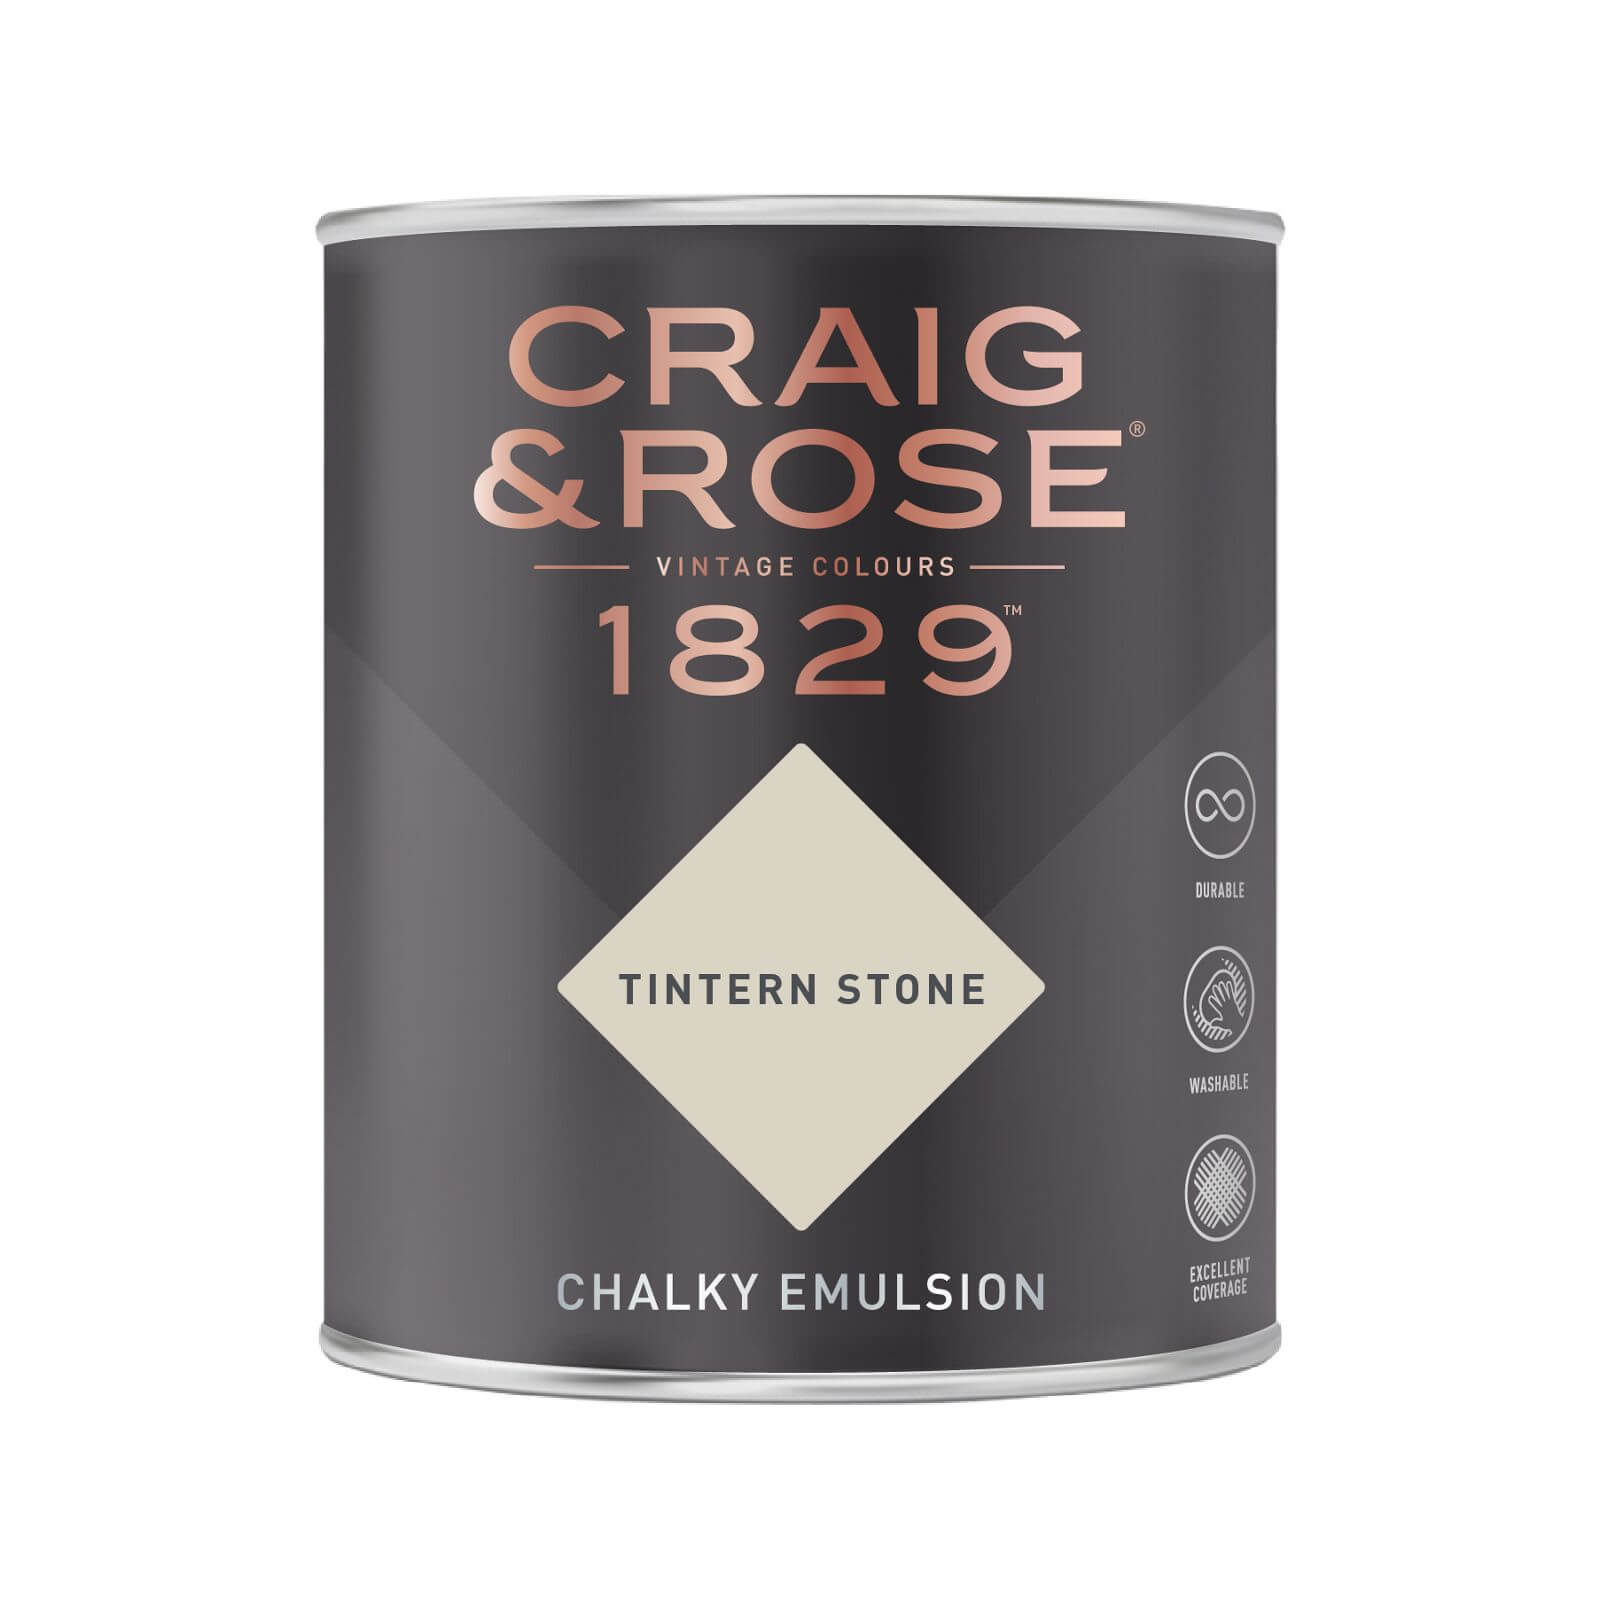 Craig & Rose 1829 Chalky Emulsion Paint Tintern Stone - 750ml